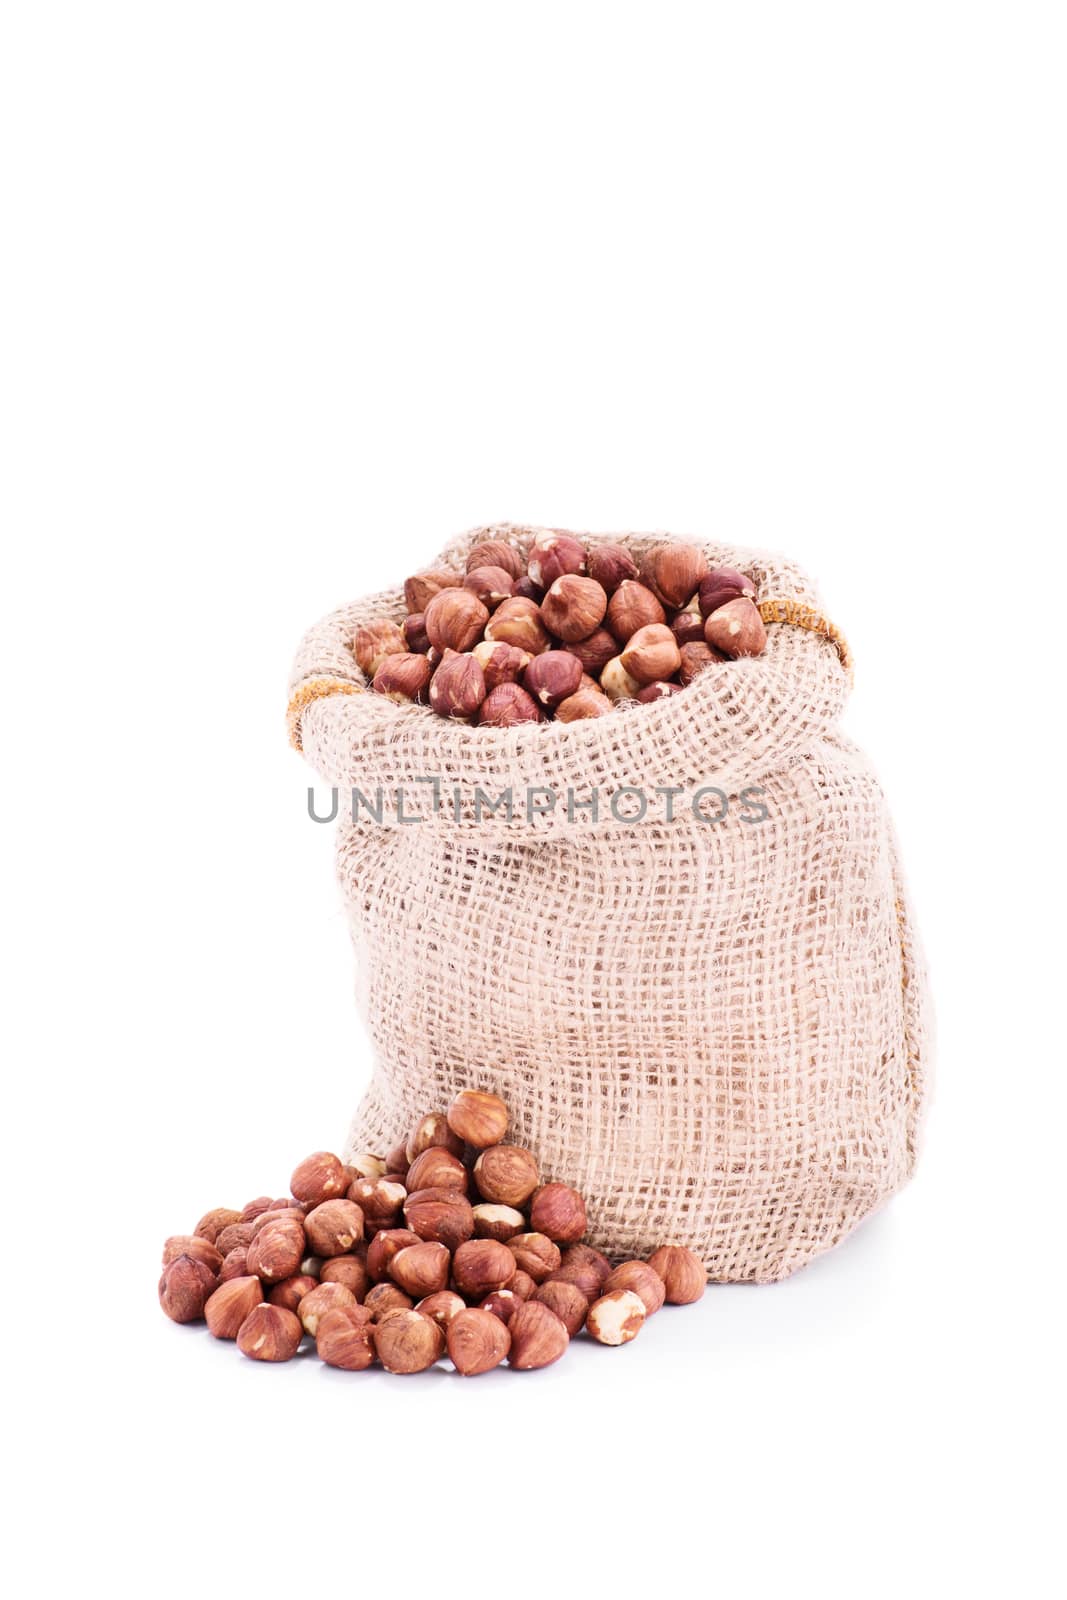 Small sack of fresh hazelnuts by Mendelex